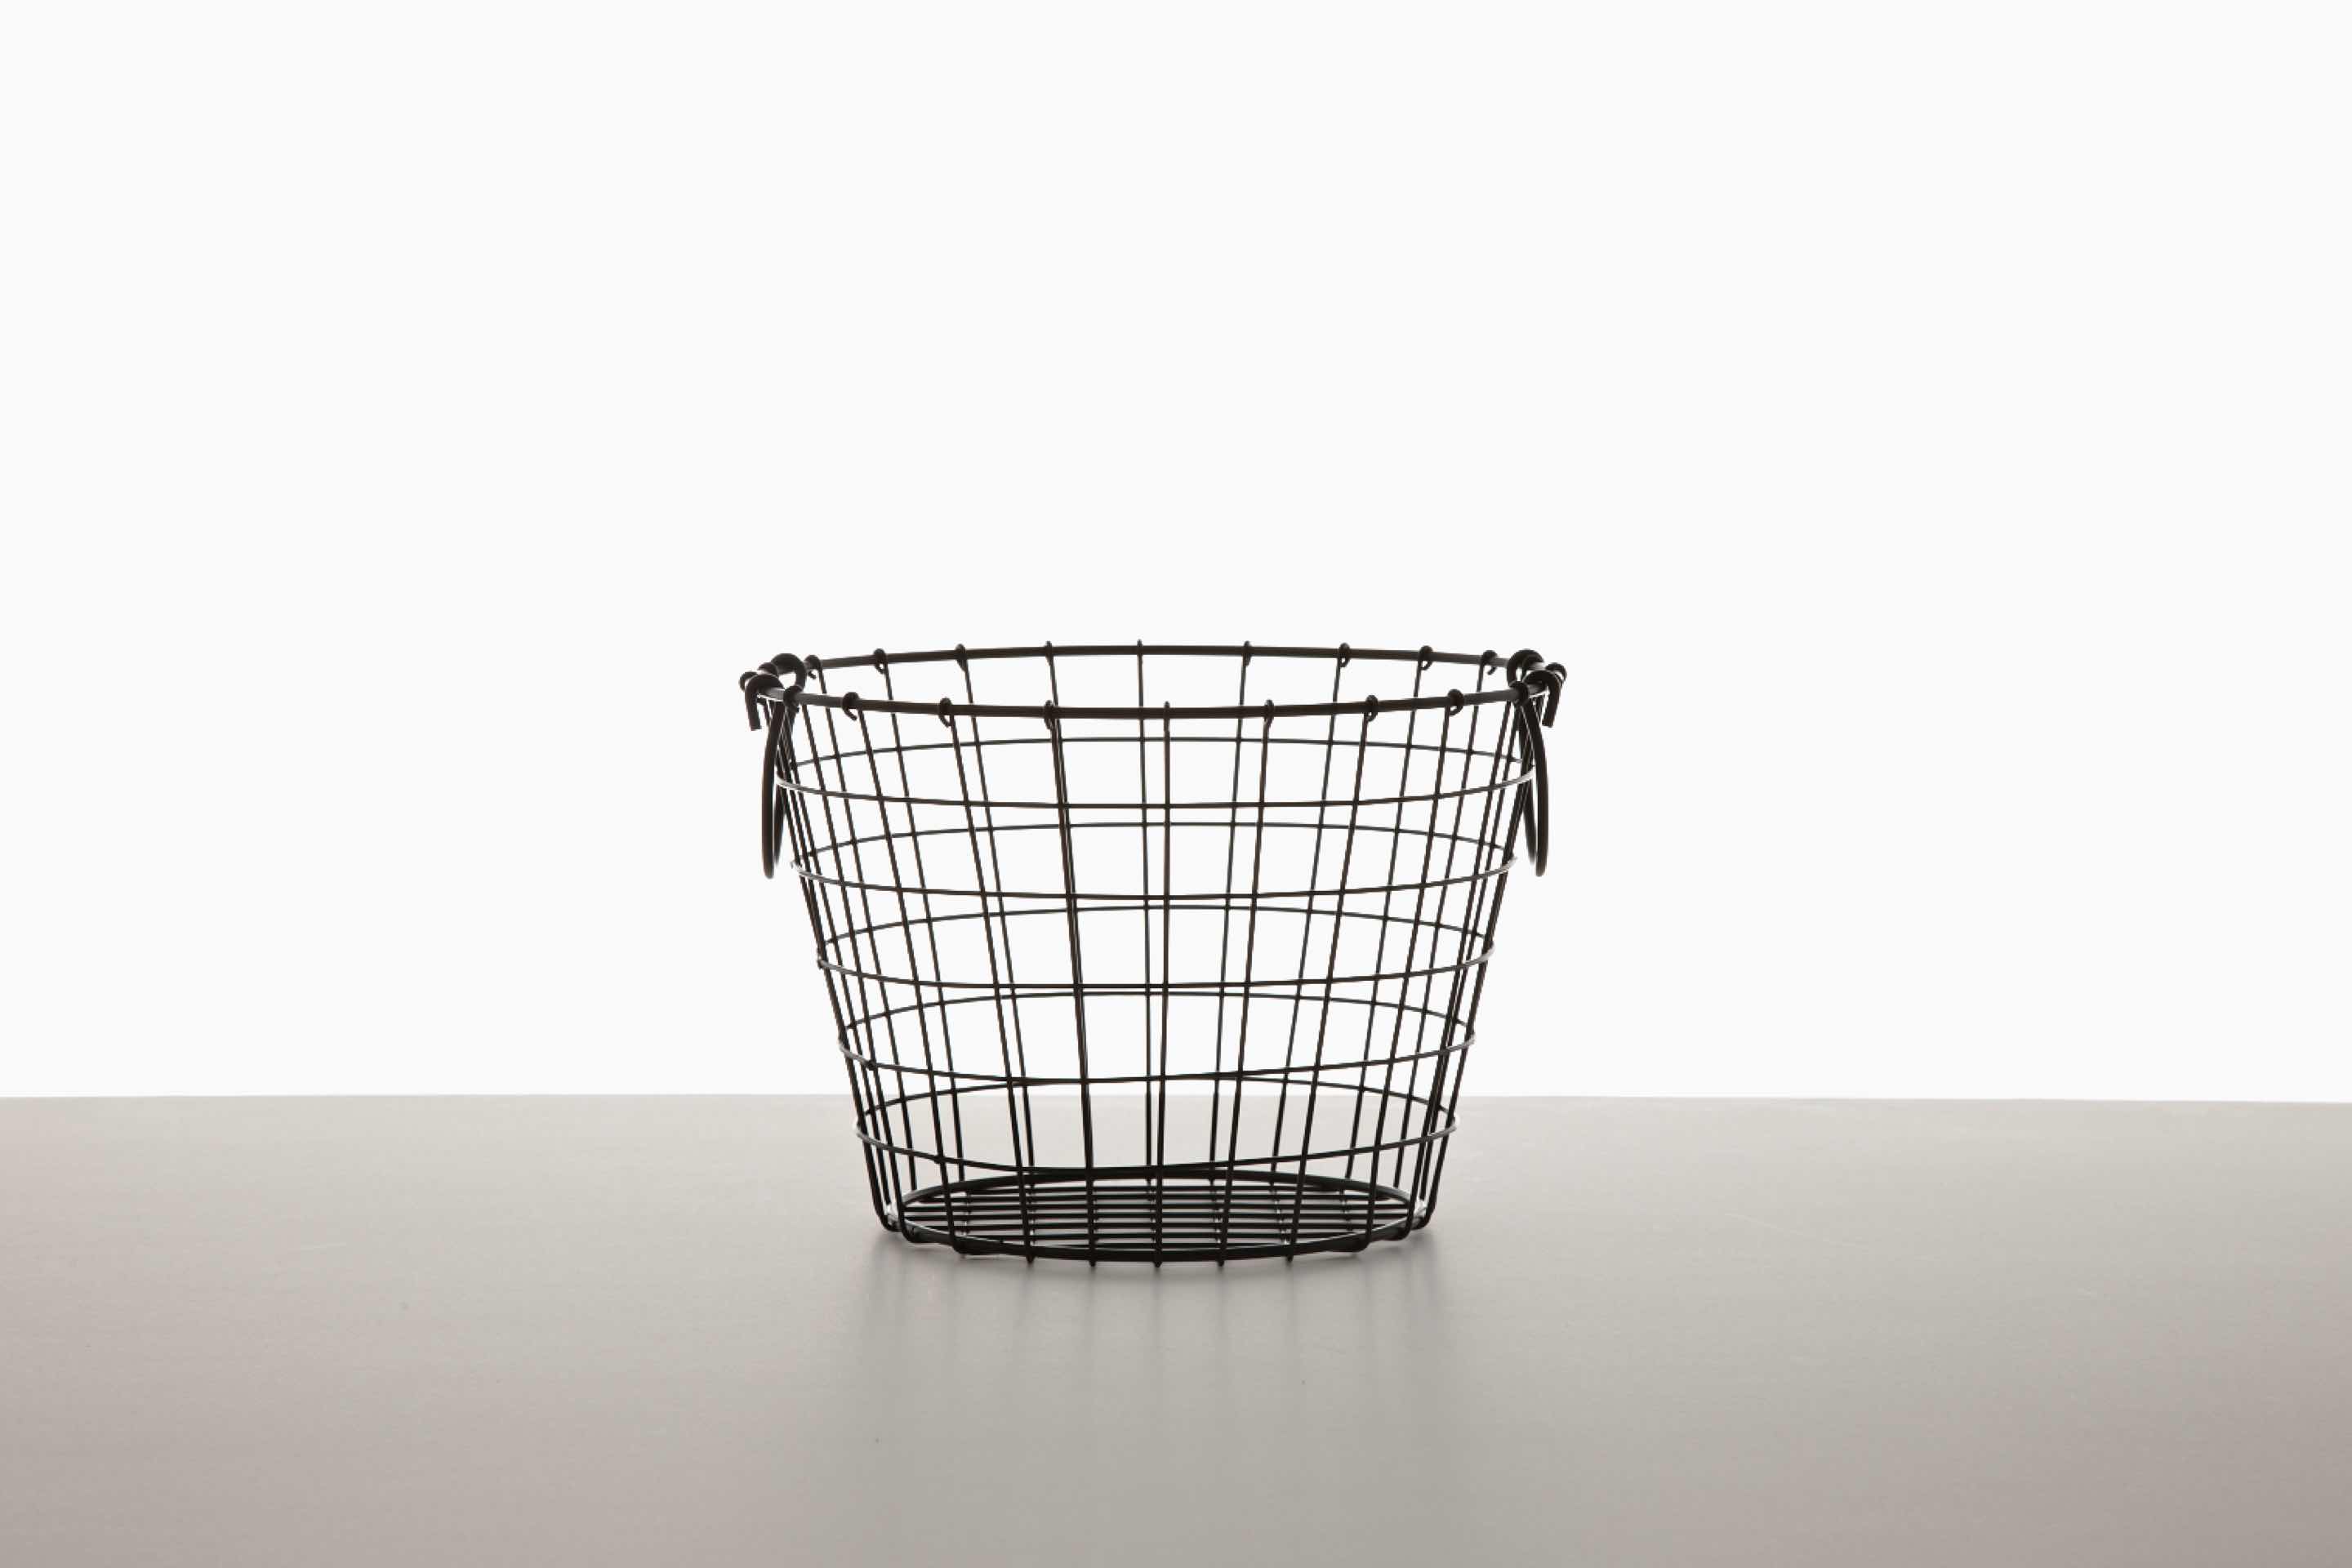 An empty black wire basket.